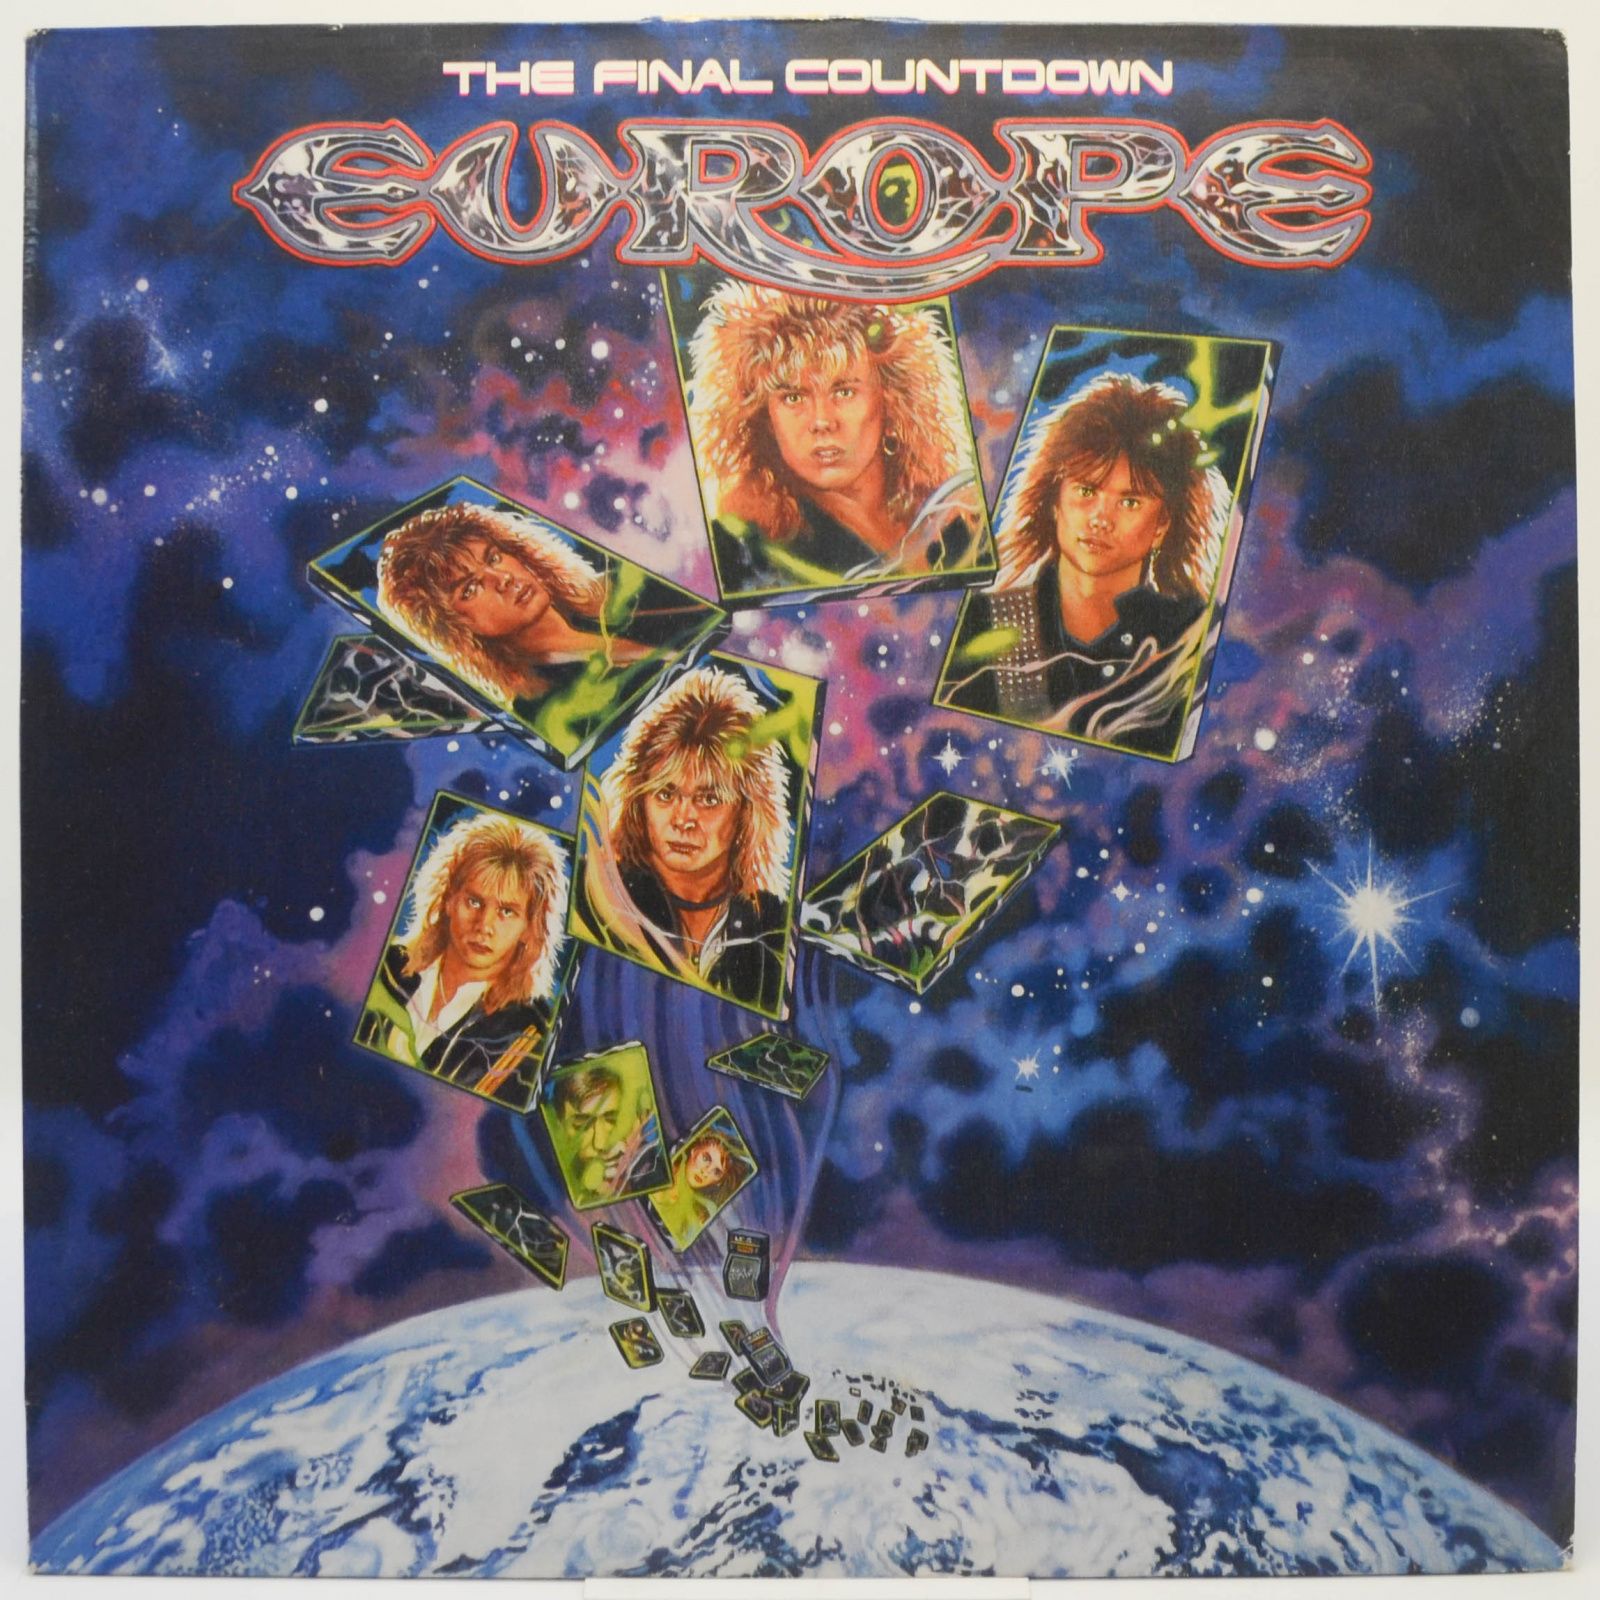 Europe — The Final Countdown, 1986